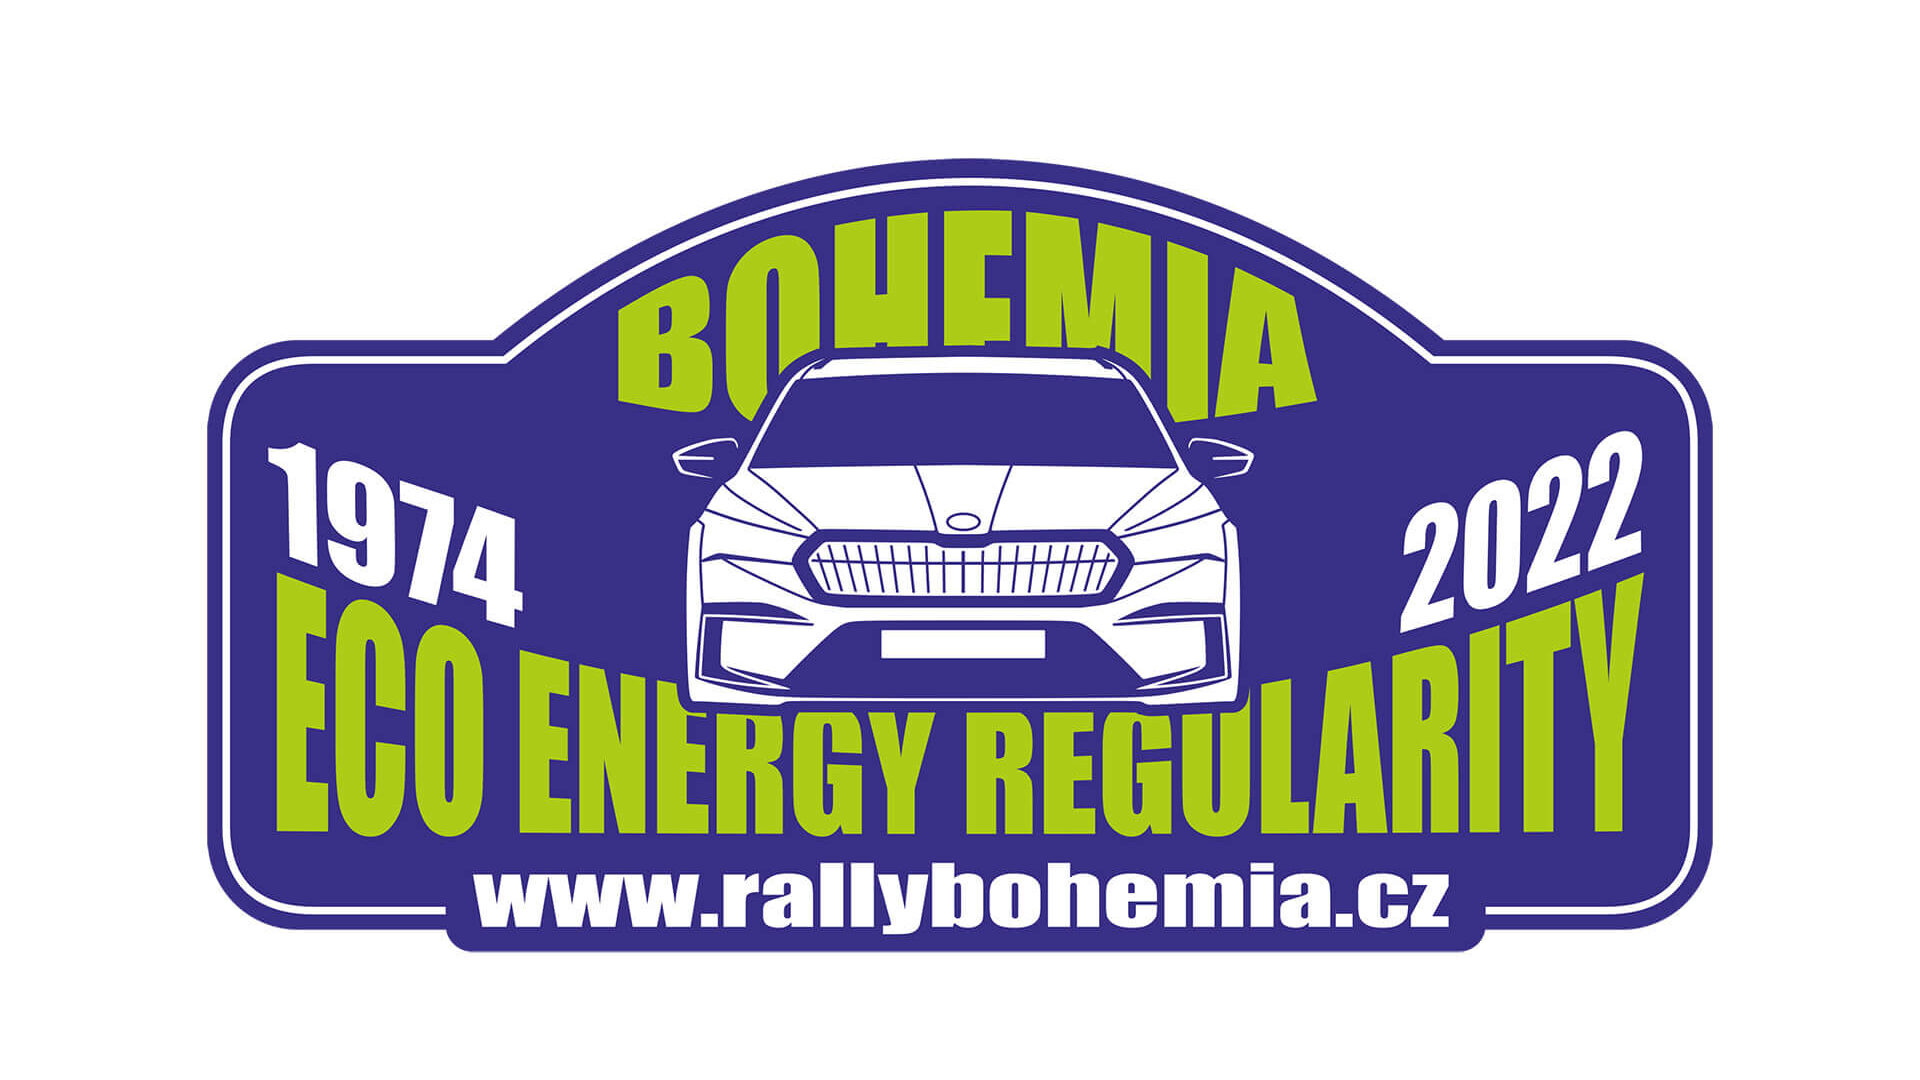 Bohemia Eco Energy Regularity 2022